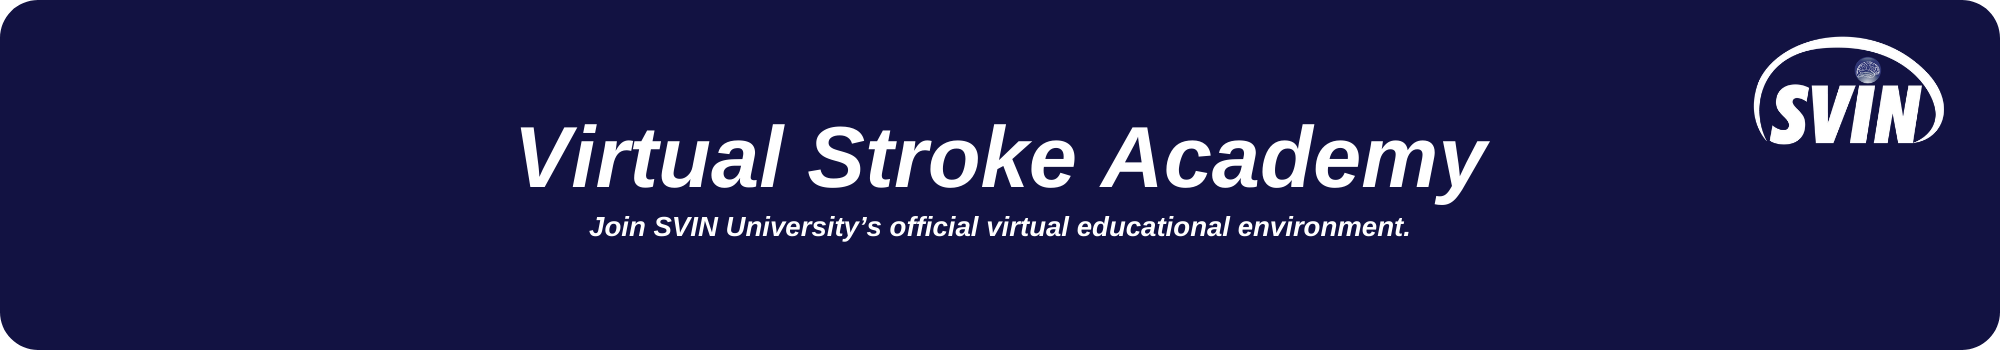 Virtual Stroke Academy